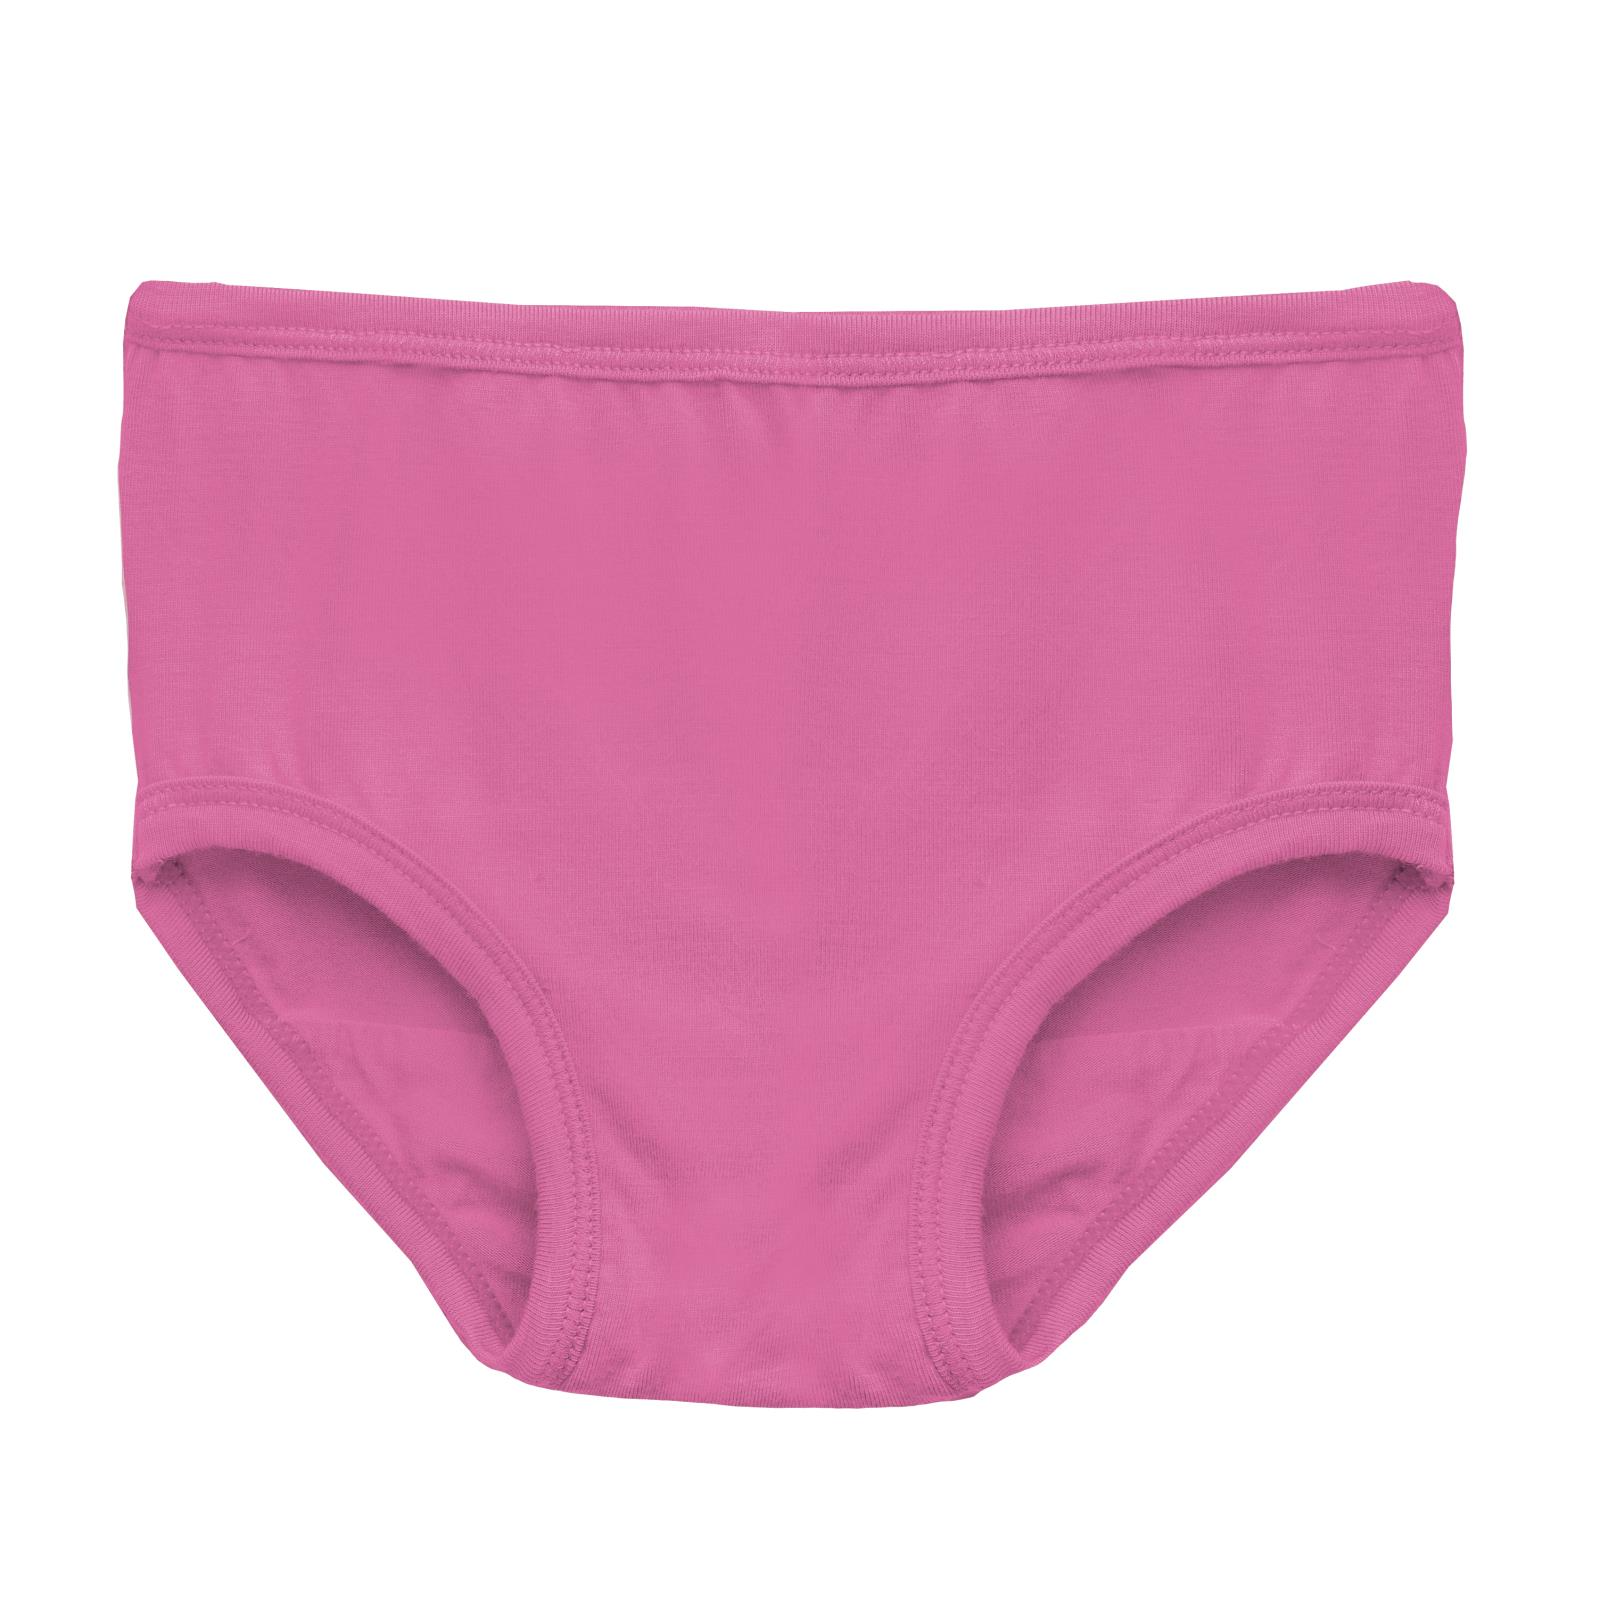 Kickee Pants Girl's Underwear Set of 3